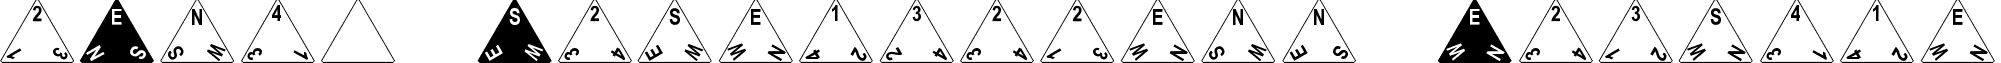 dPoly Tetrahedron Regular font - dPoly_Tetrahedron.ttf